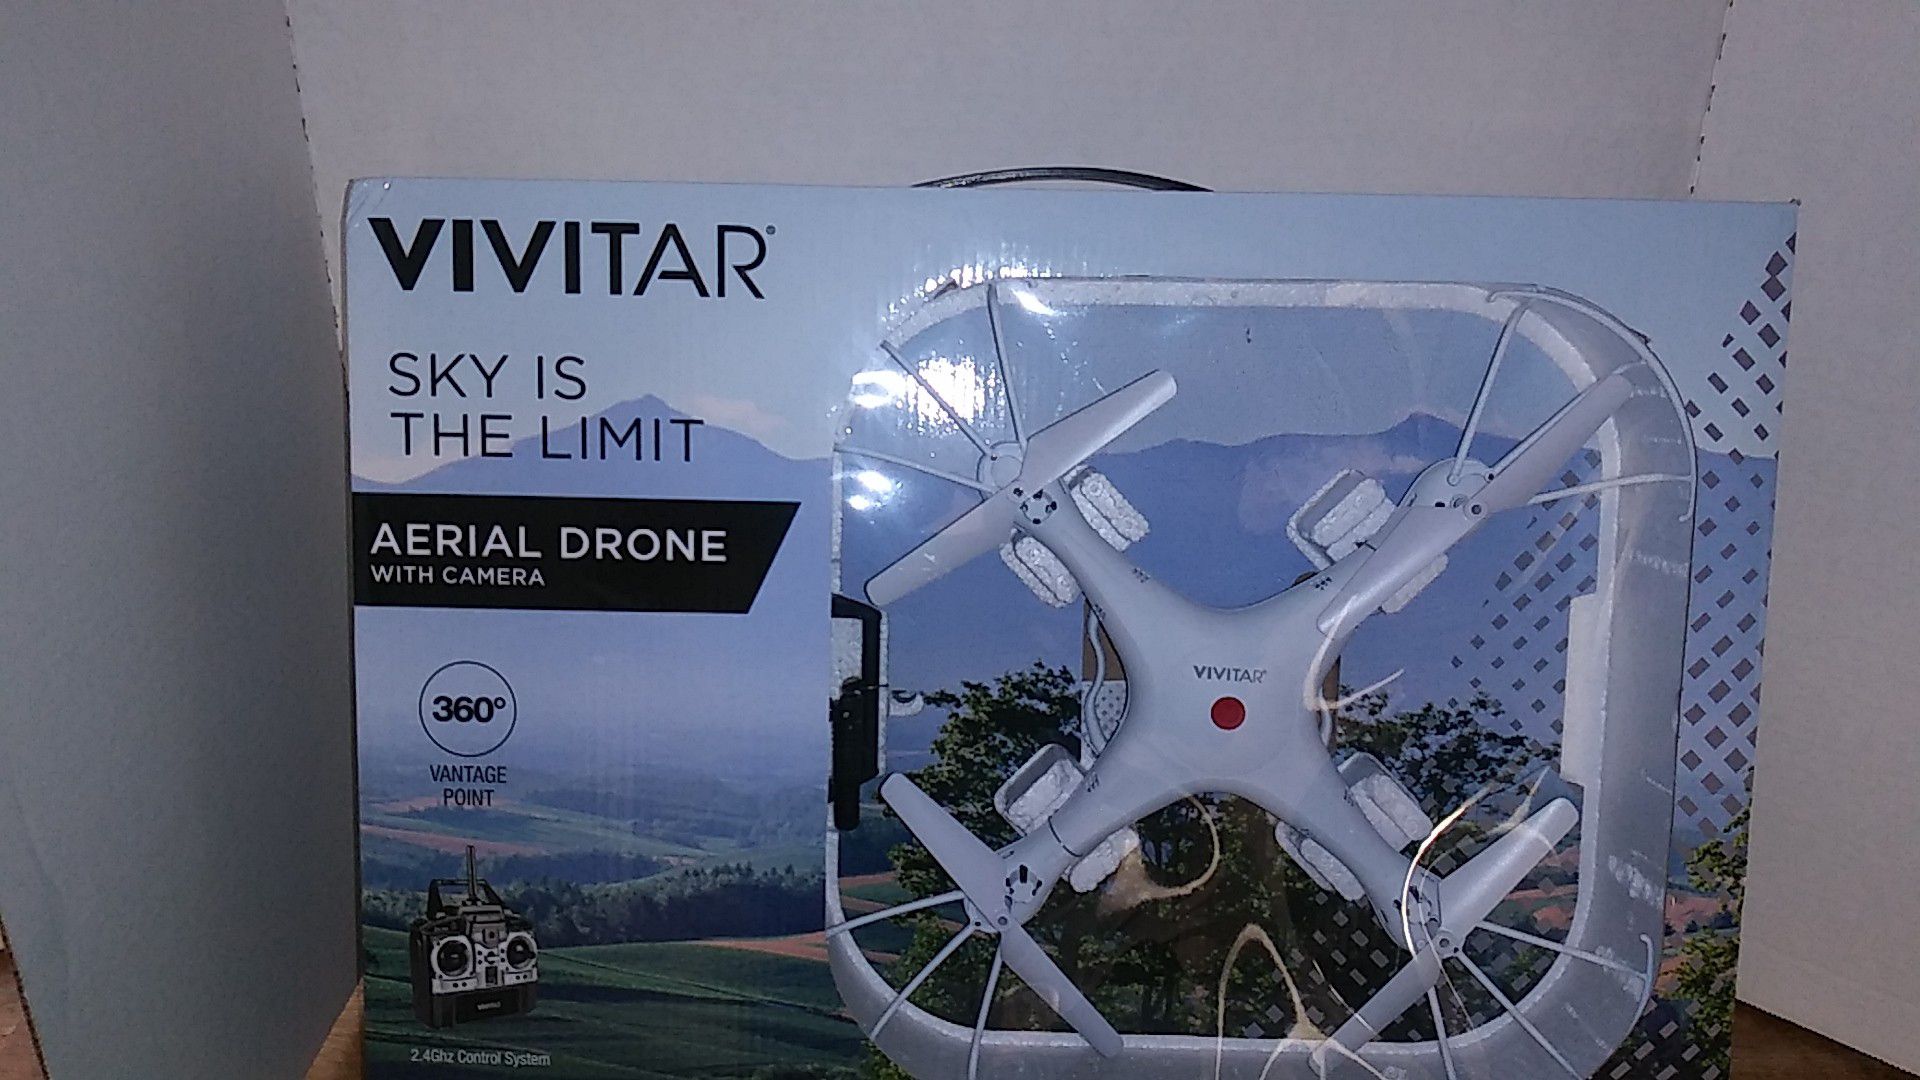 Vivitar aerial drone with camera